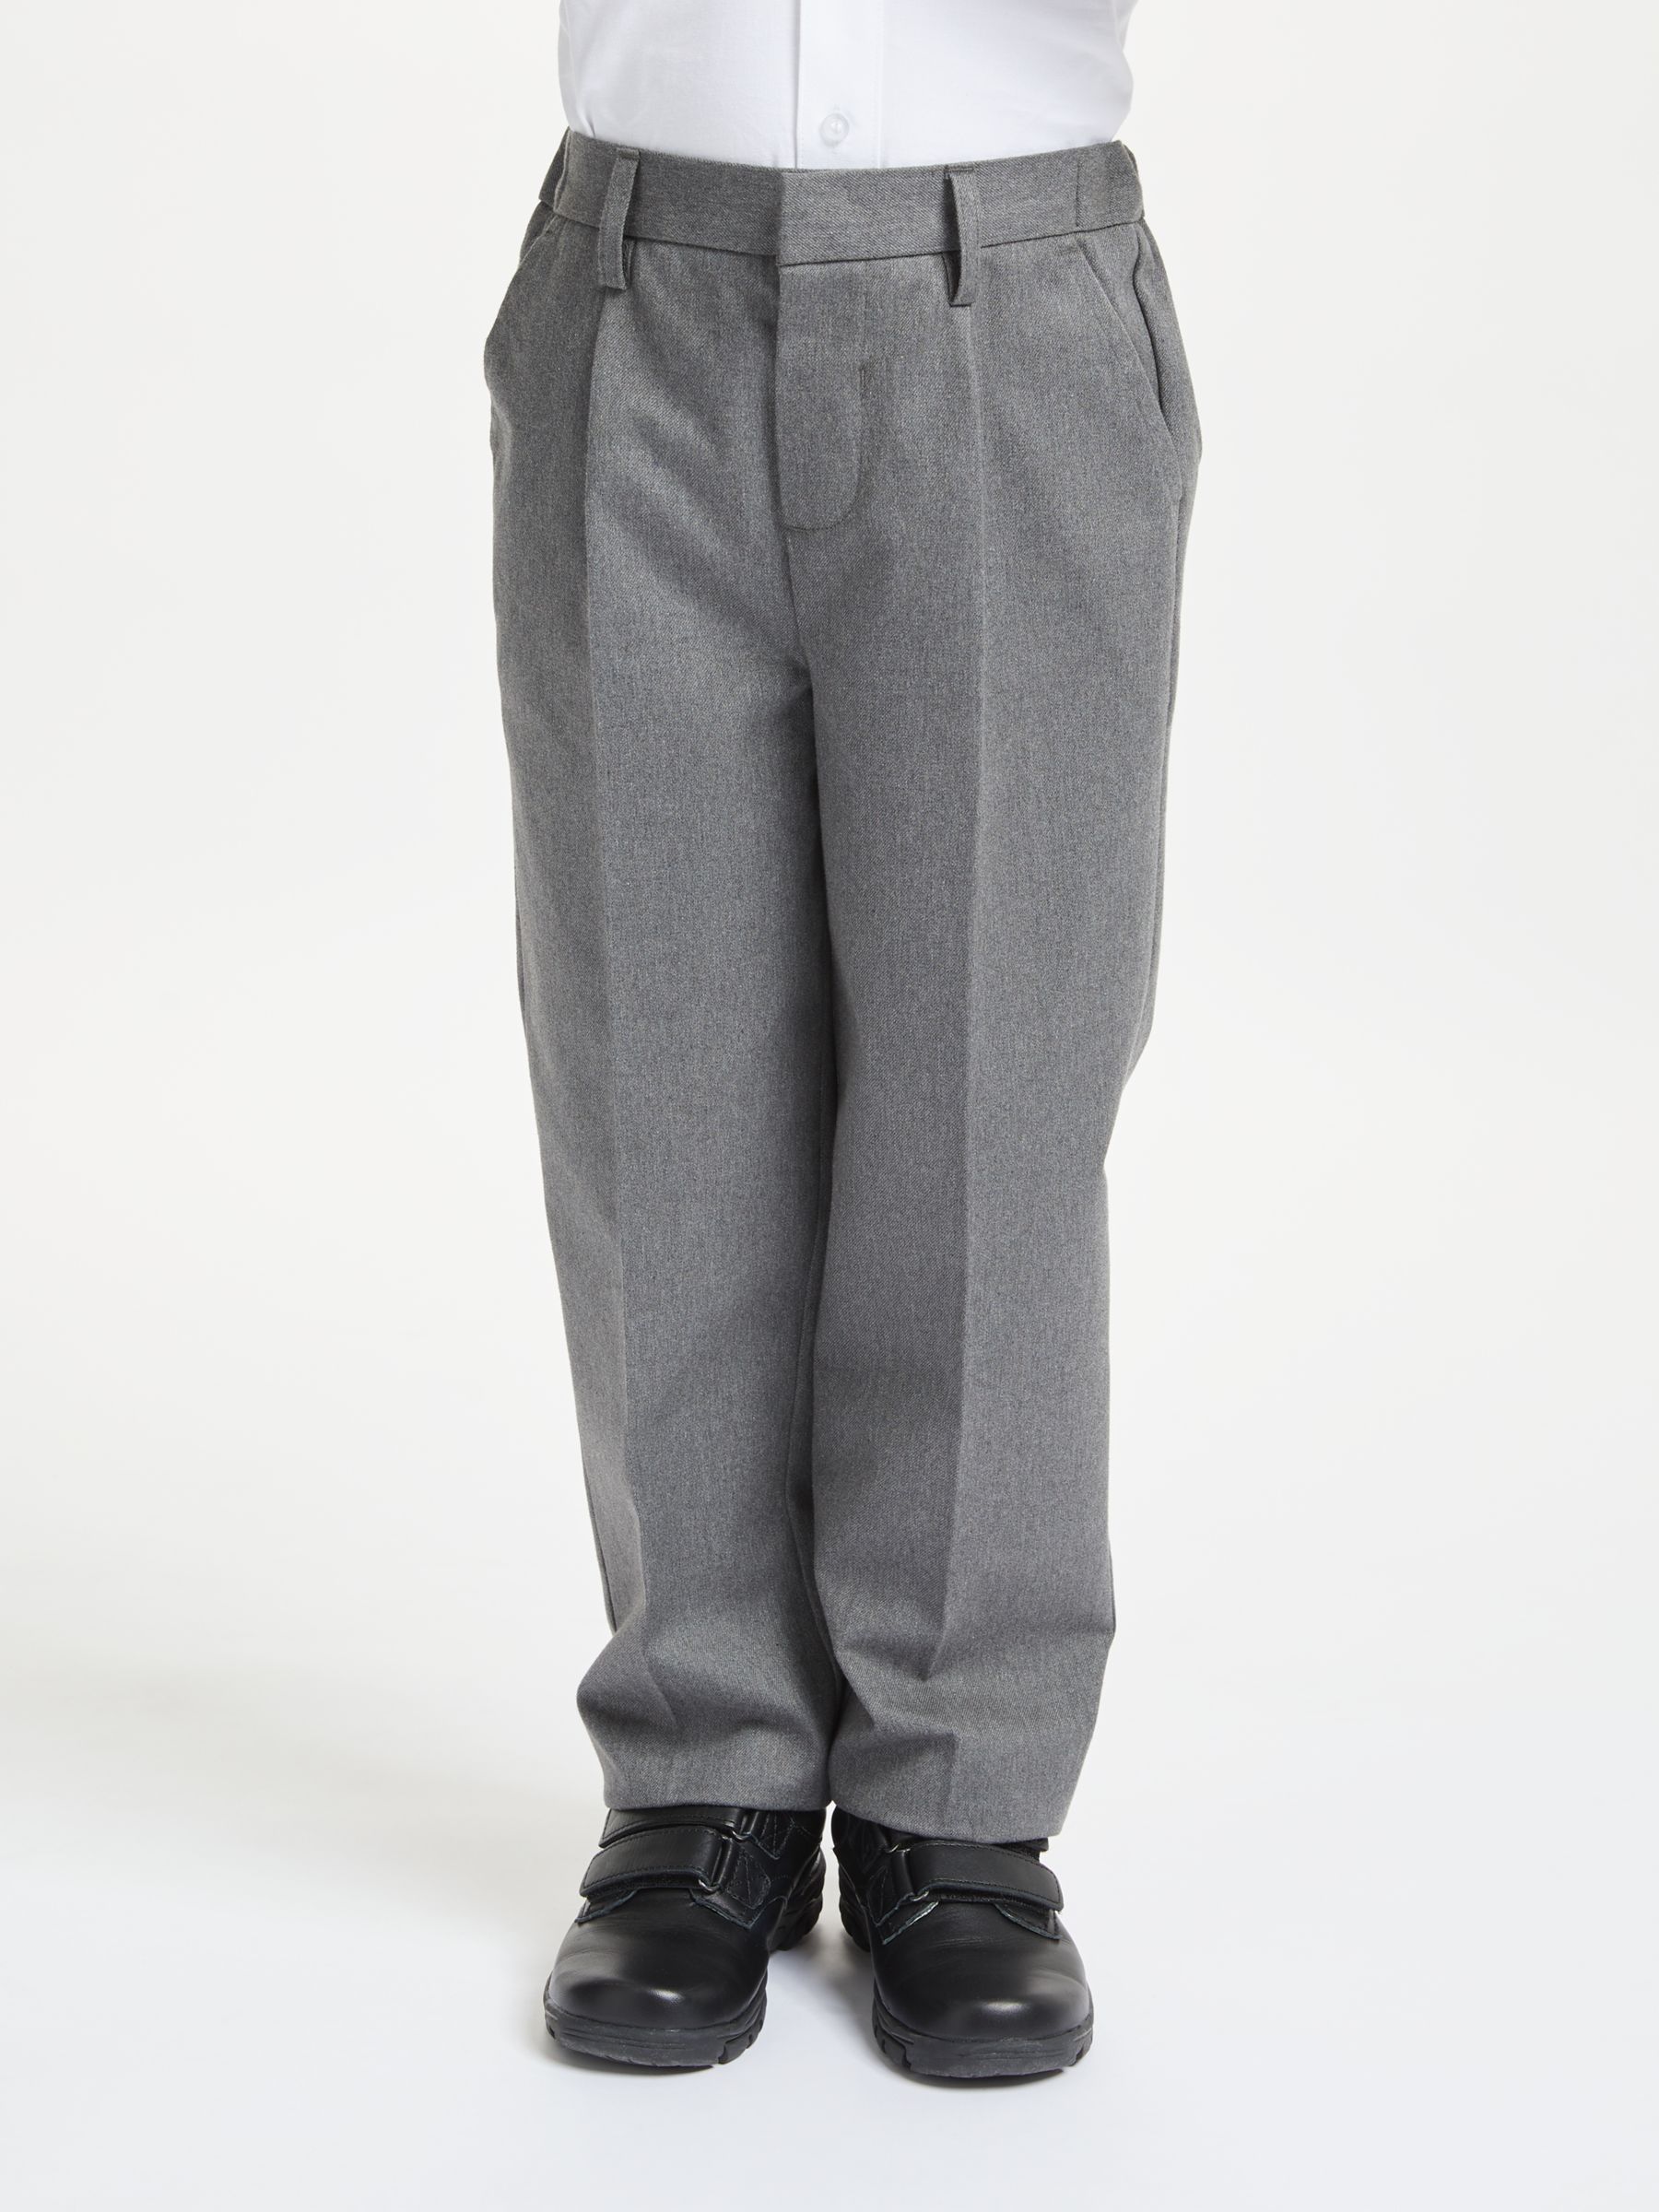 John Lewis & Partners Boys' Pure Cotton Adjustable Waist Straight Leg School Trousers